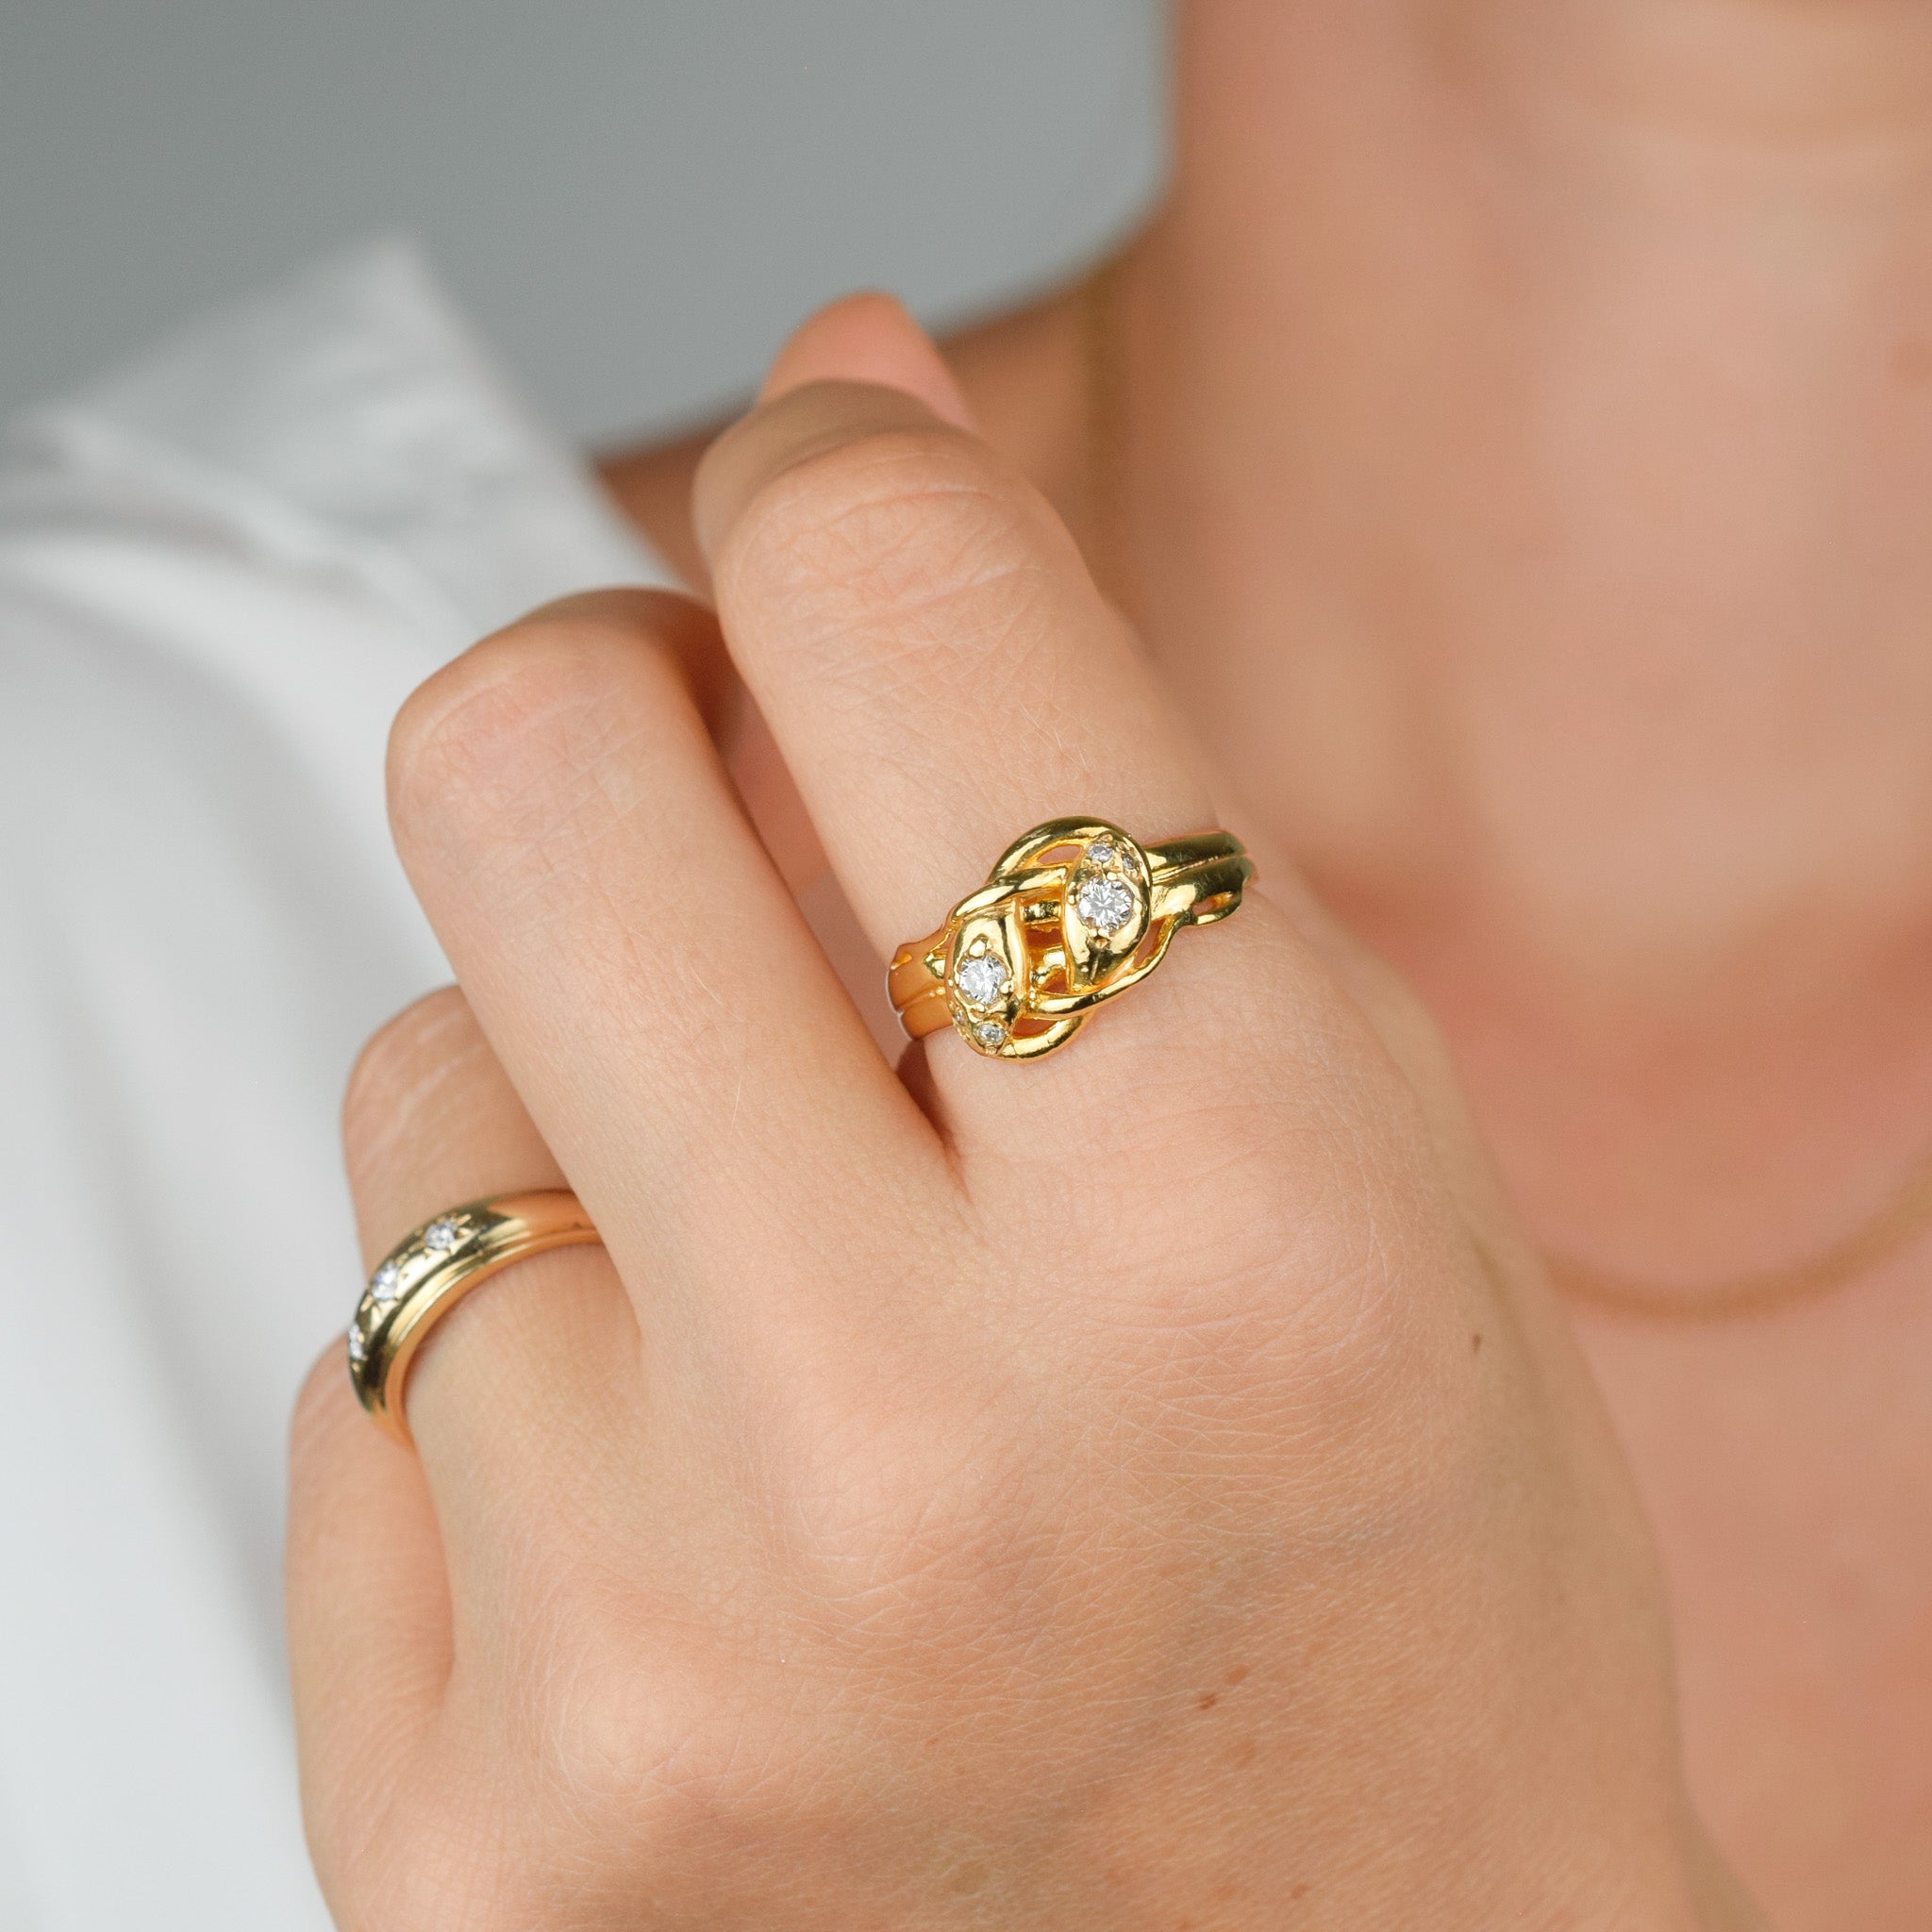 antique gold snake ring, folklor vintage jewelry canada